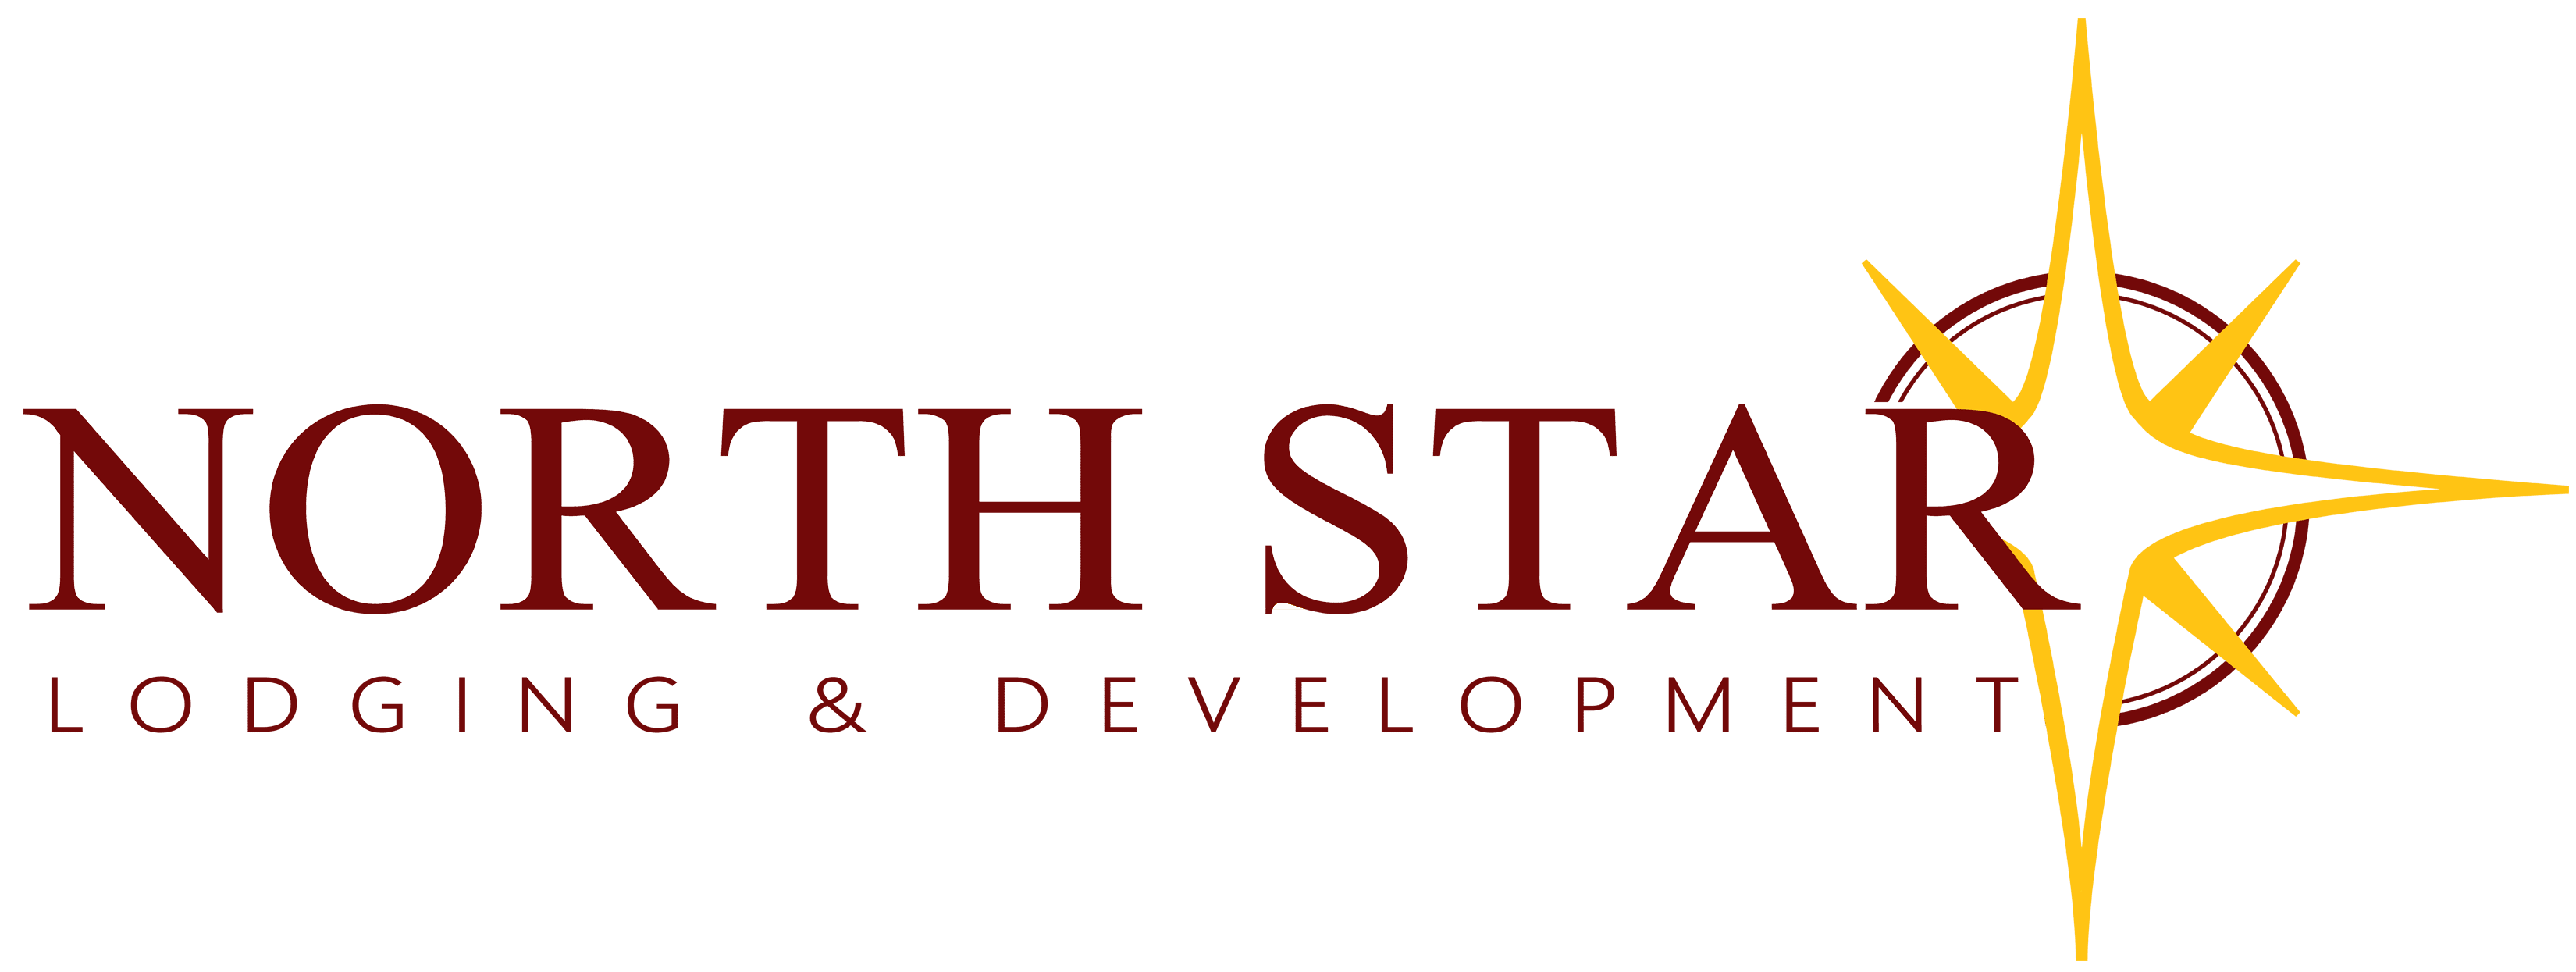 North Star Lodging & Development